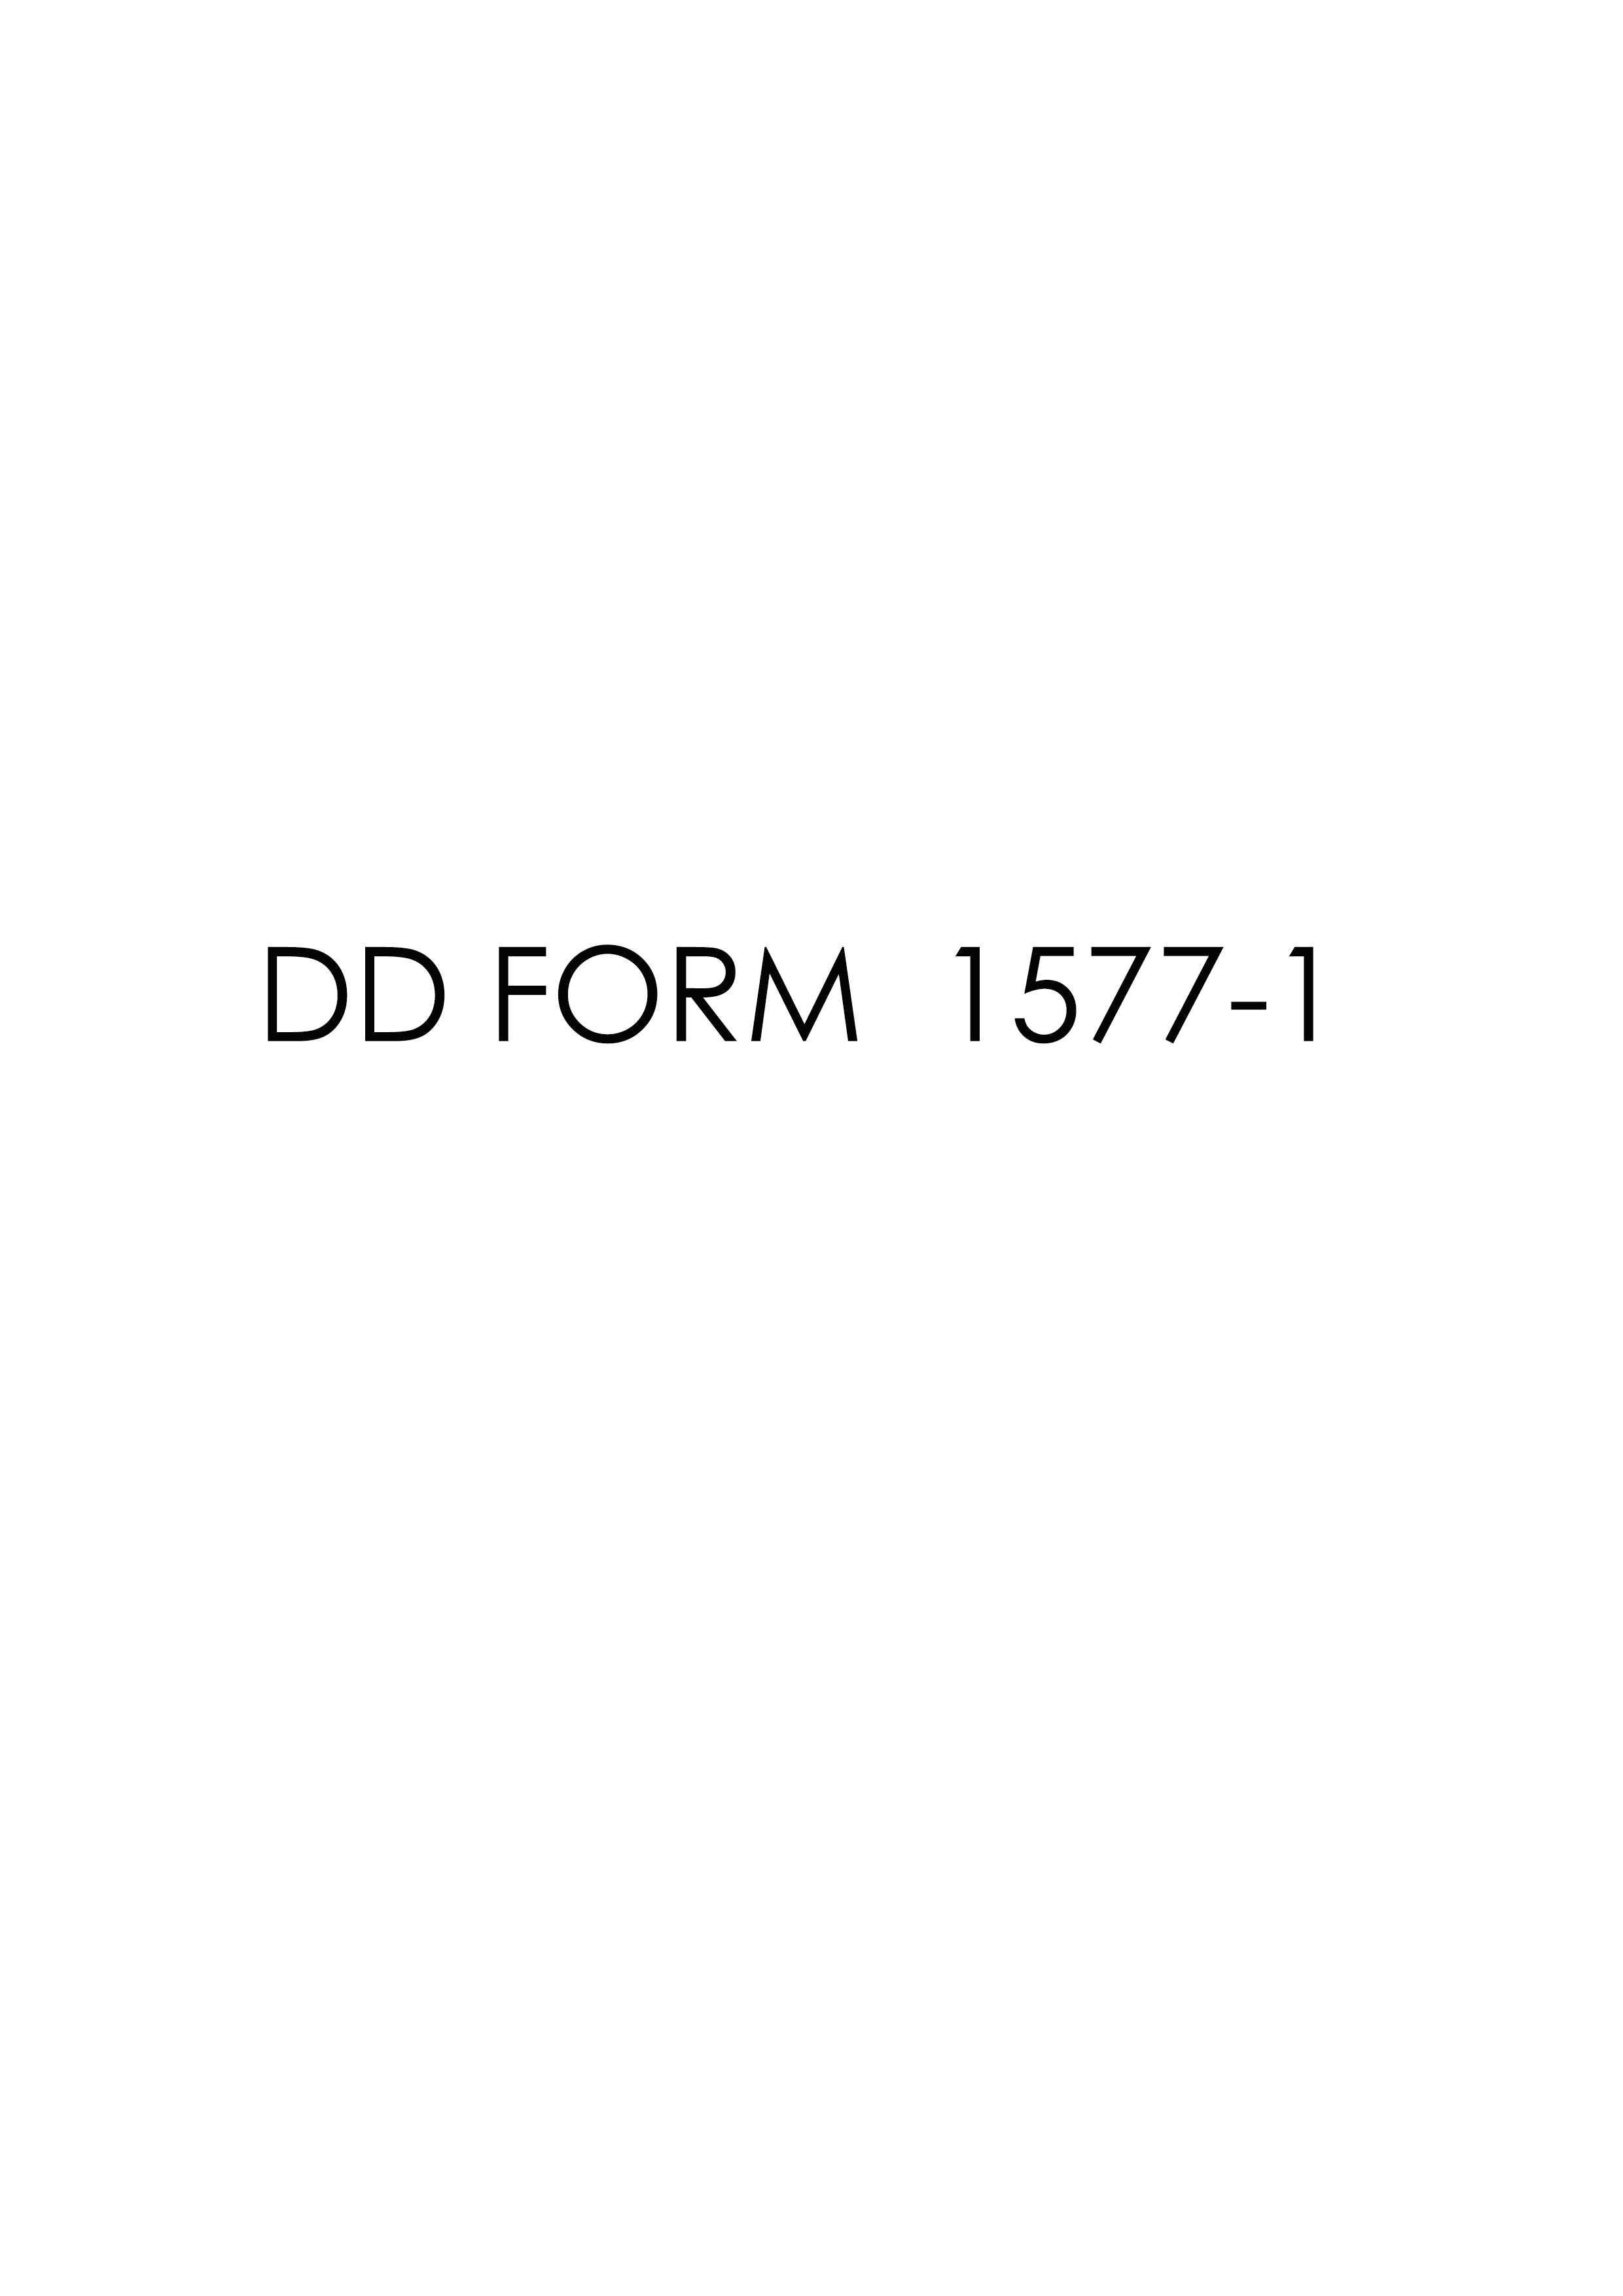 Download dd 1577-1 Form